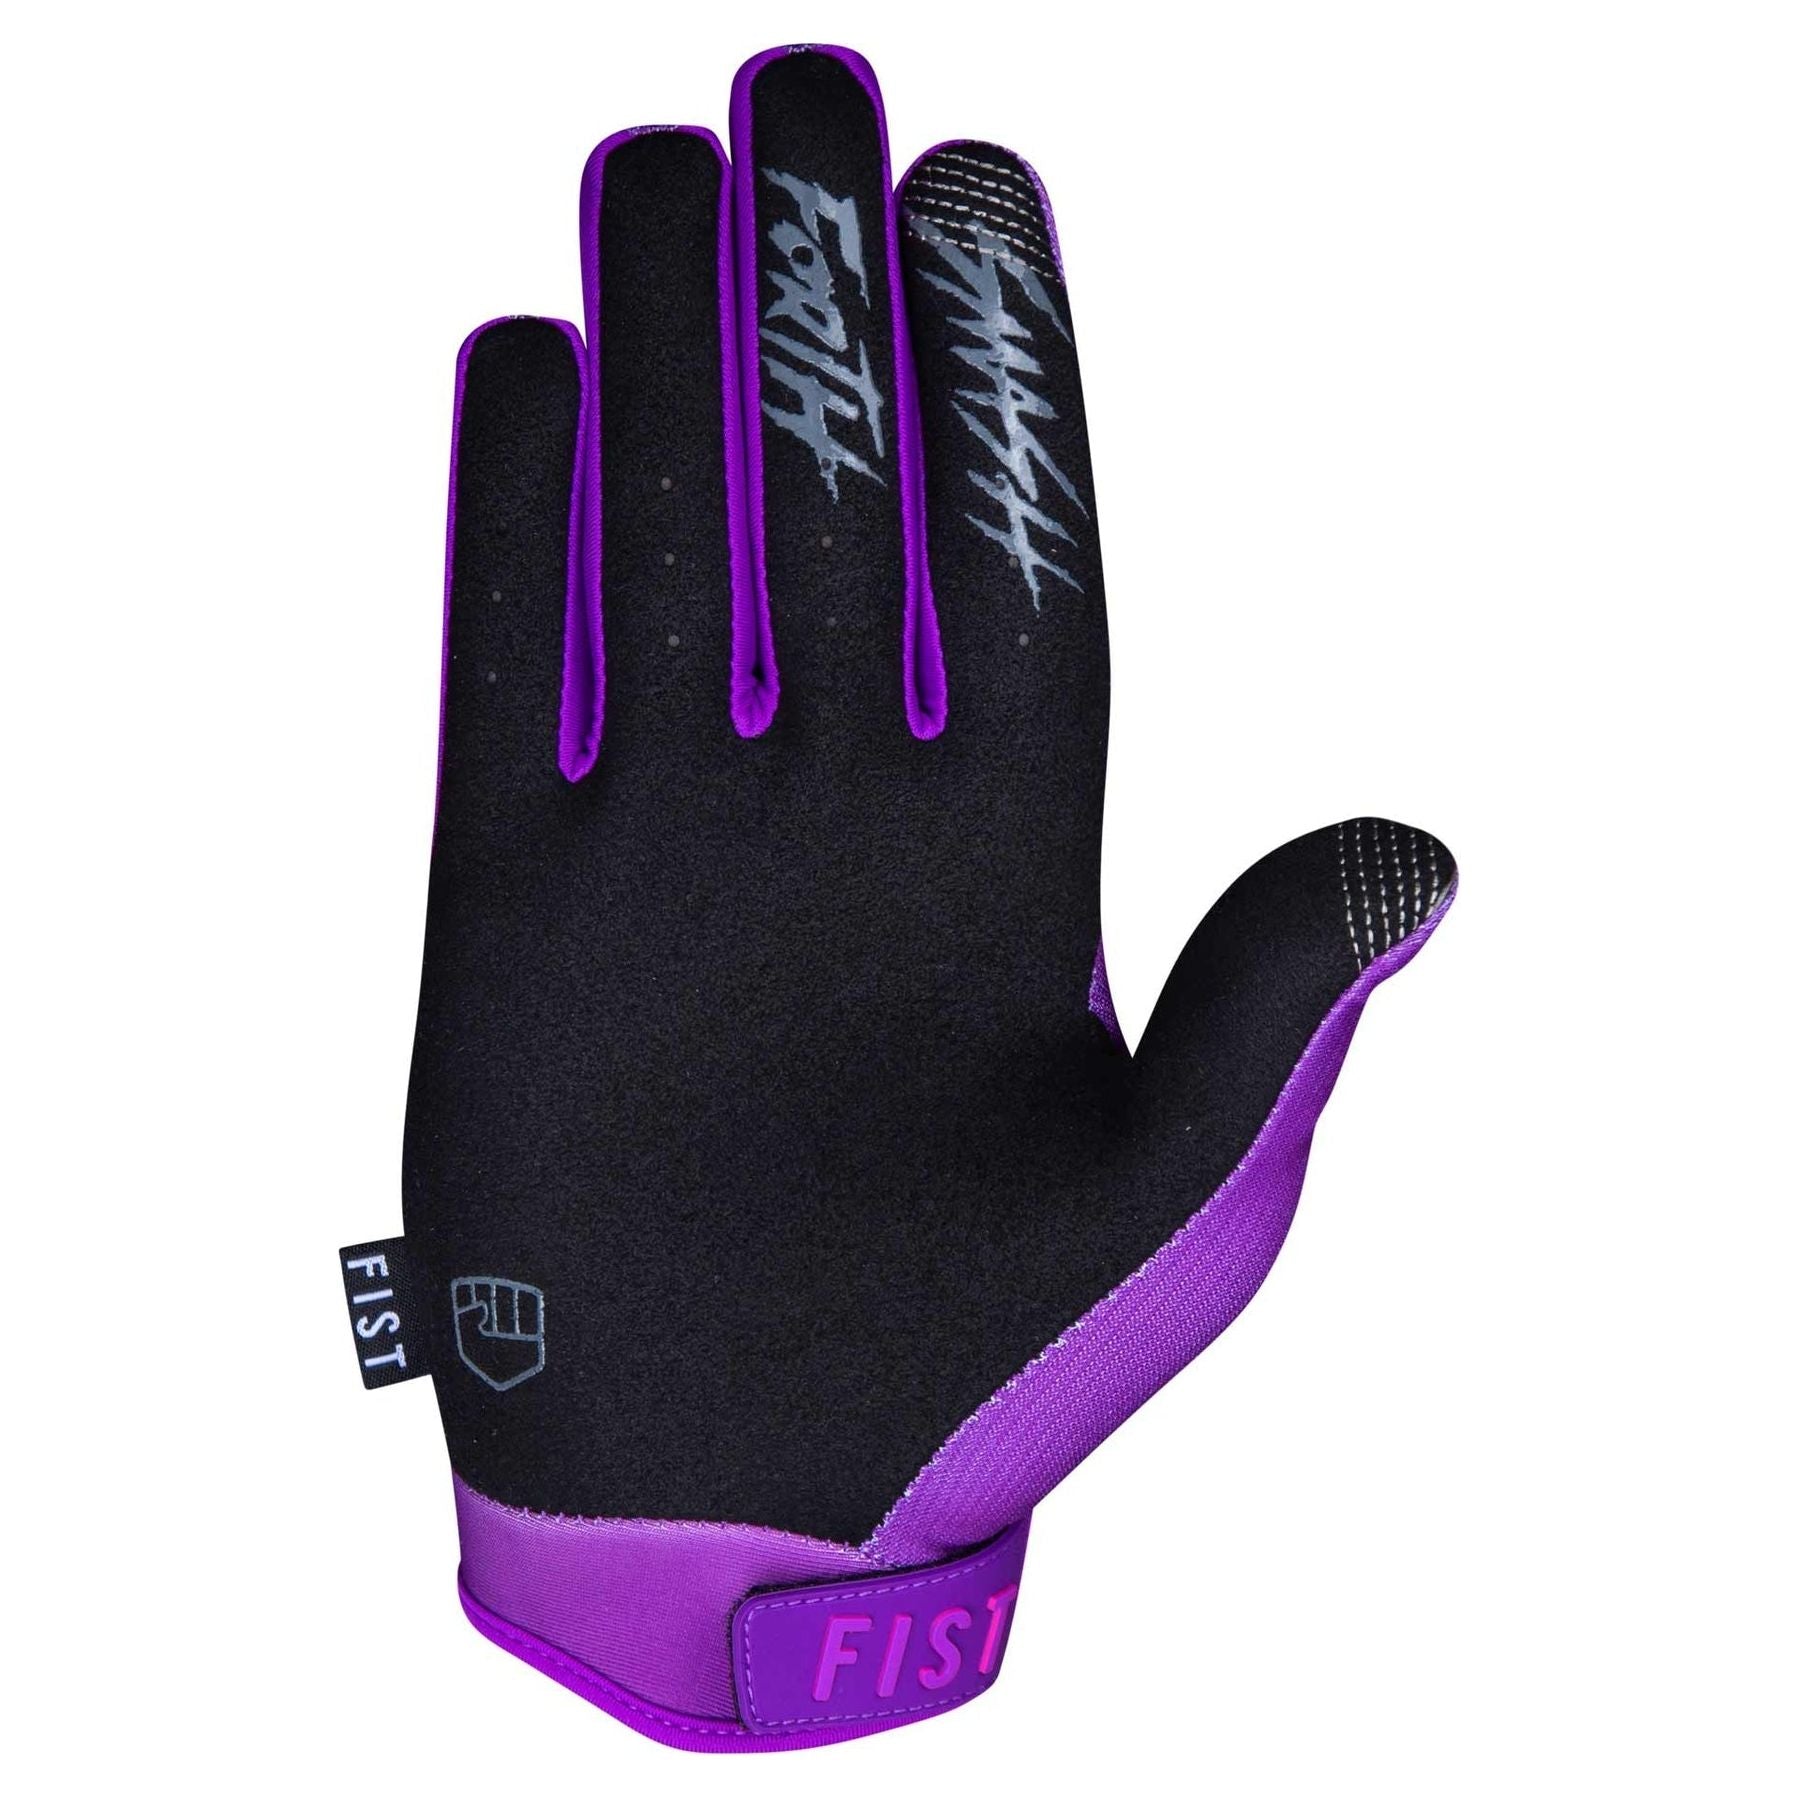 Fist Handwear Stocker Youth Strapped Glove - Youth L - Purple Stocker - Image 2